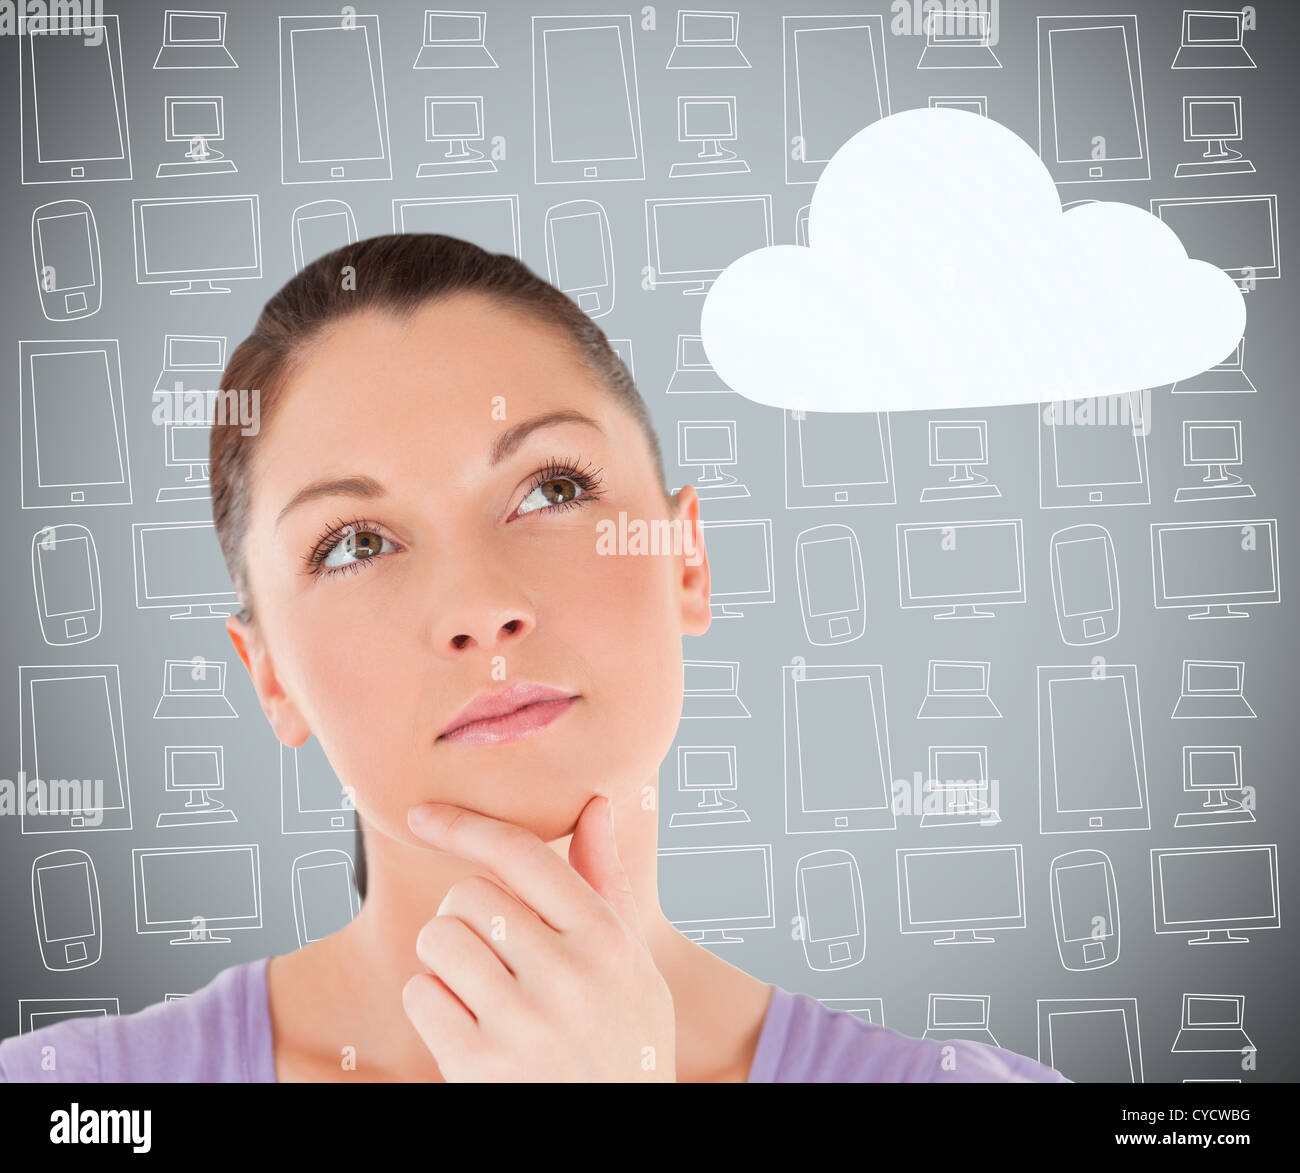 Brunette considering cloud computing Stock Photo